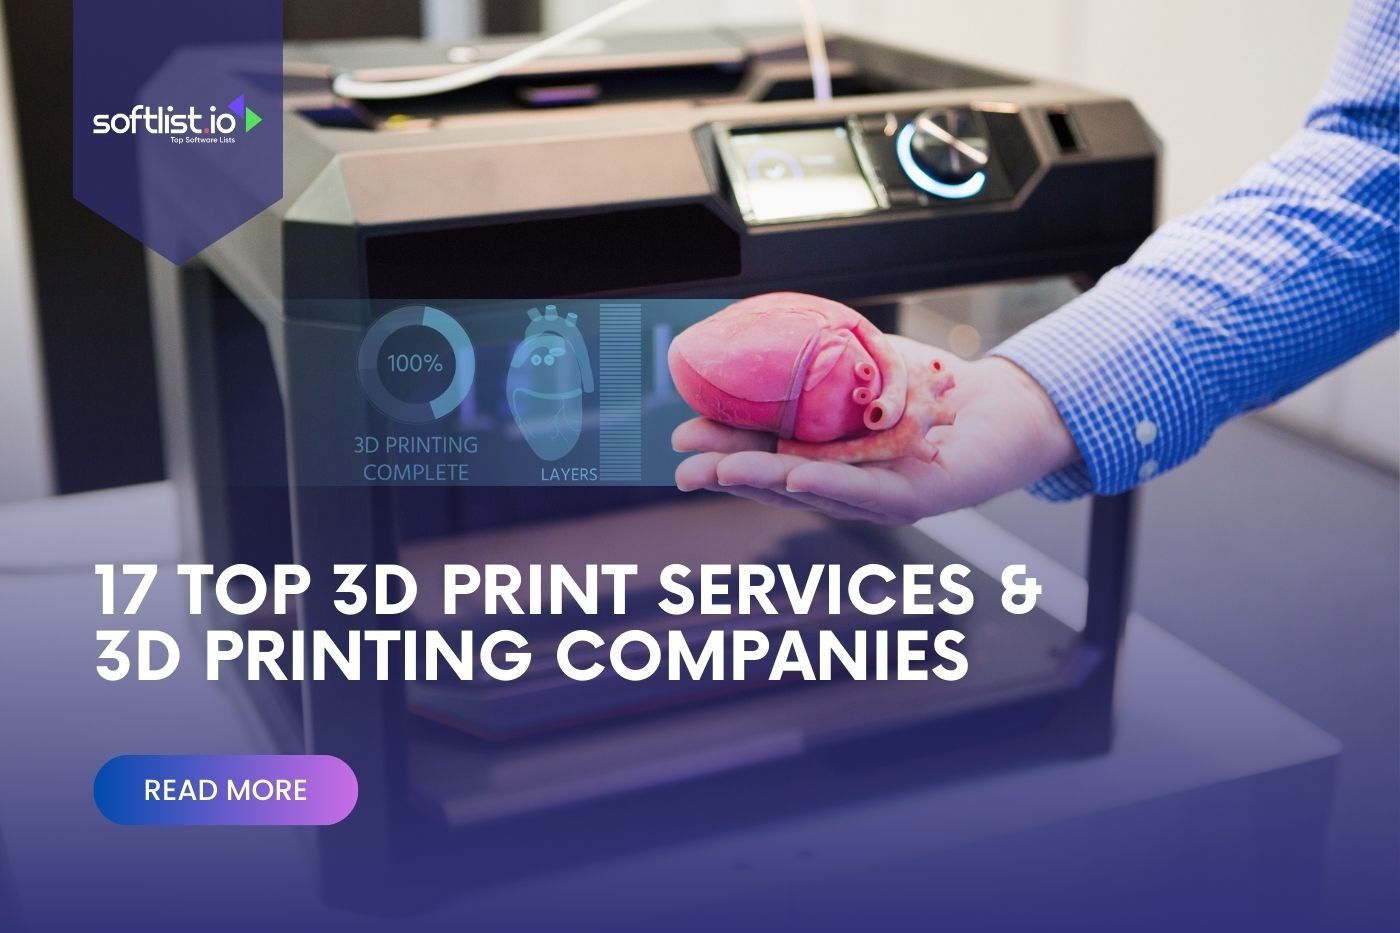 17 Top 3D Printing Companies